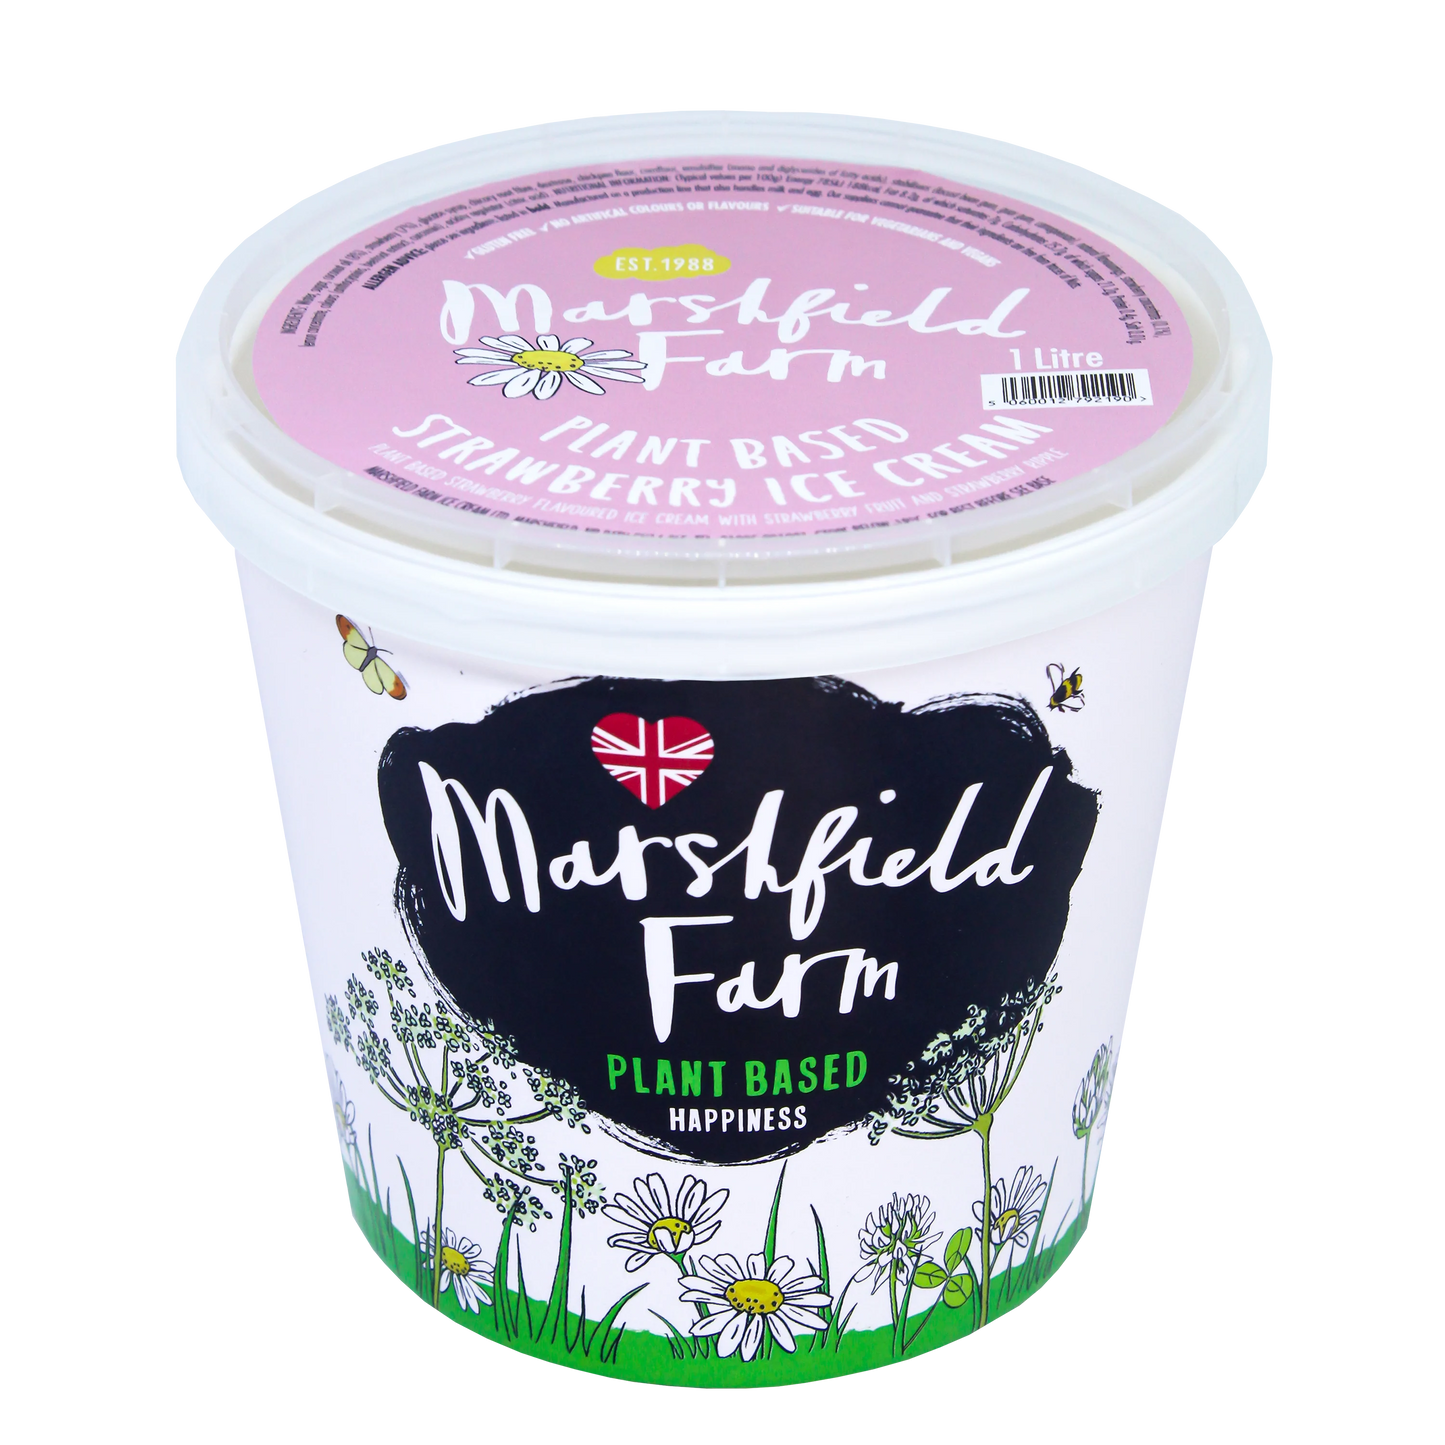 Marshfield Farm Plant Based Strawberry Ice Cream 1 Litre Tub